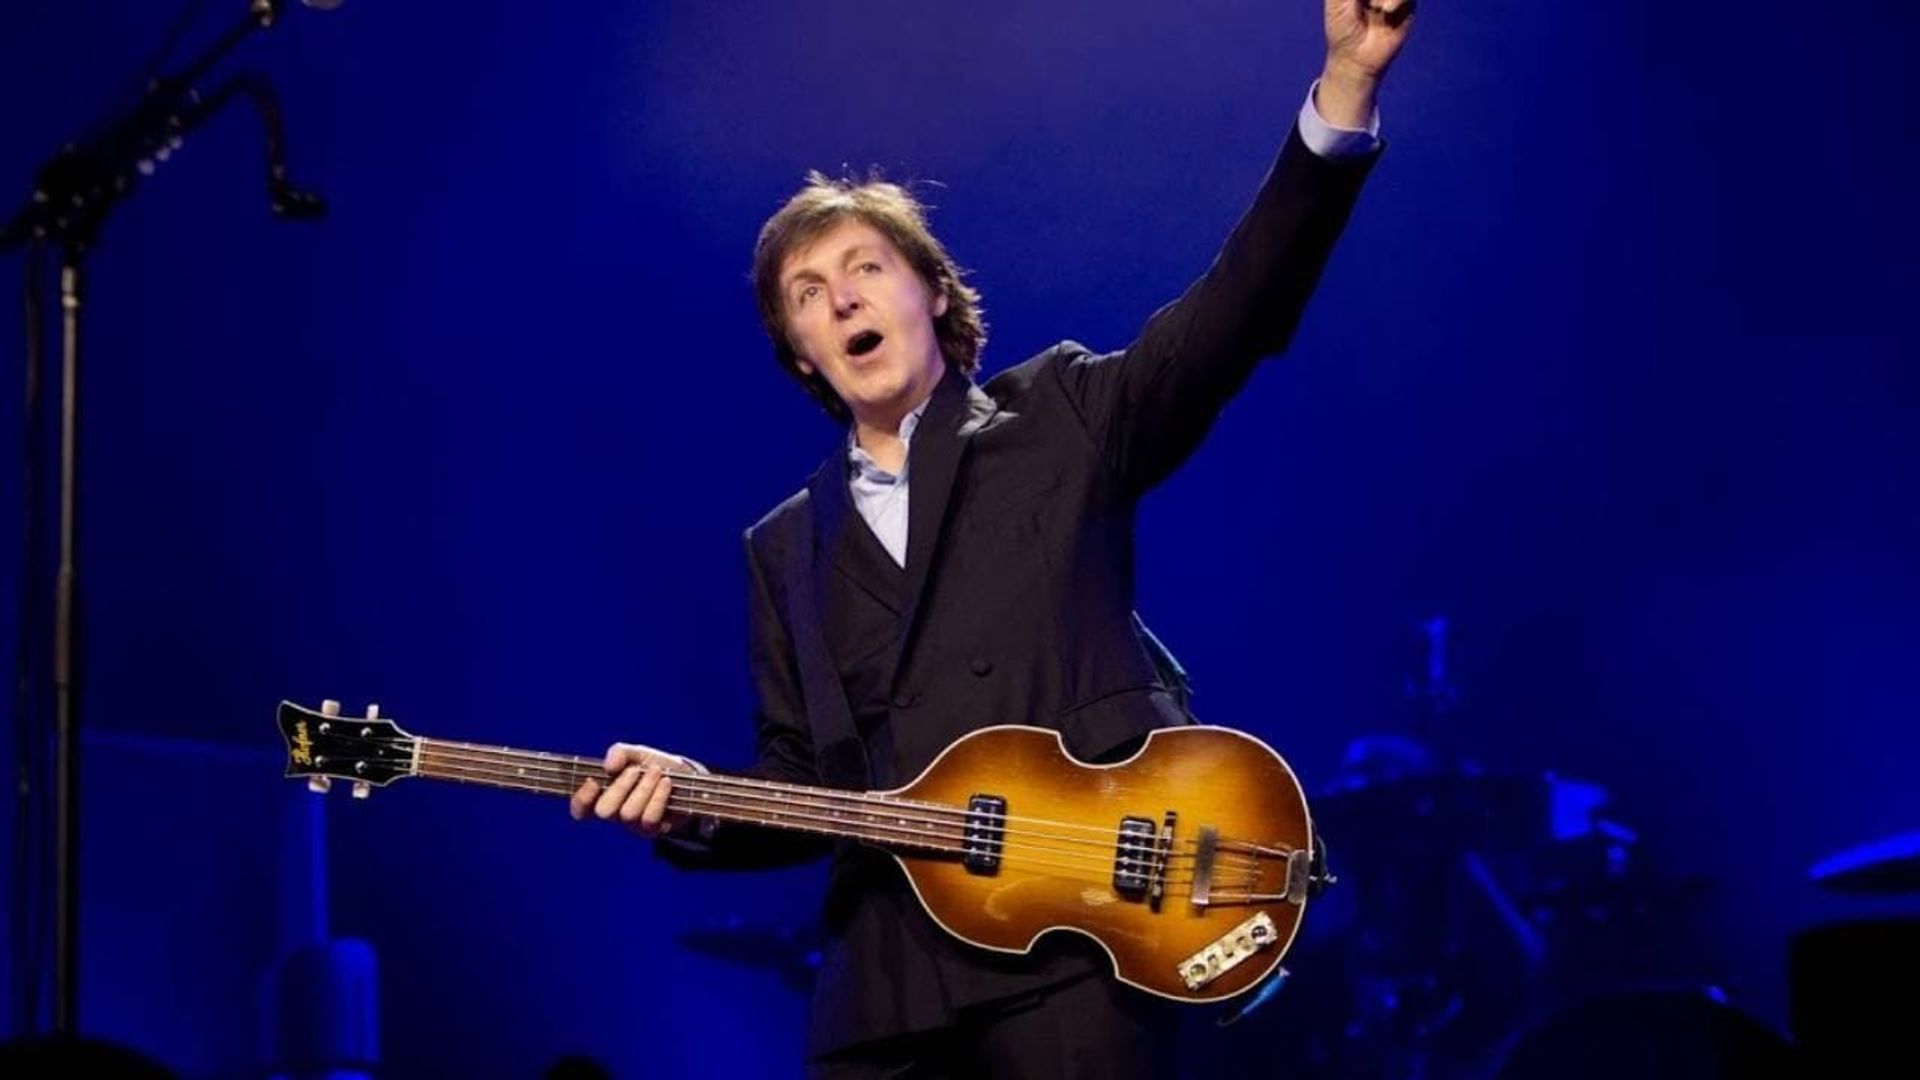 Paul McCartney's Get Back background